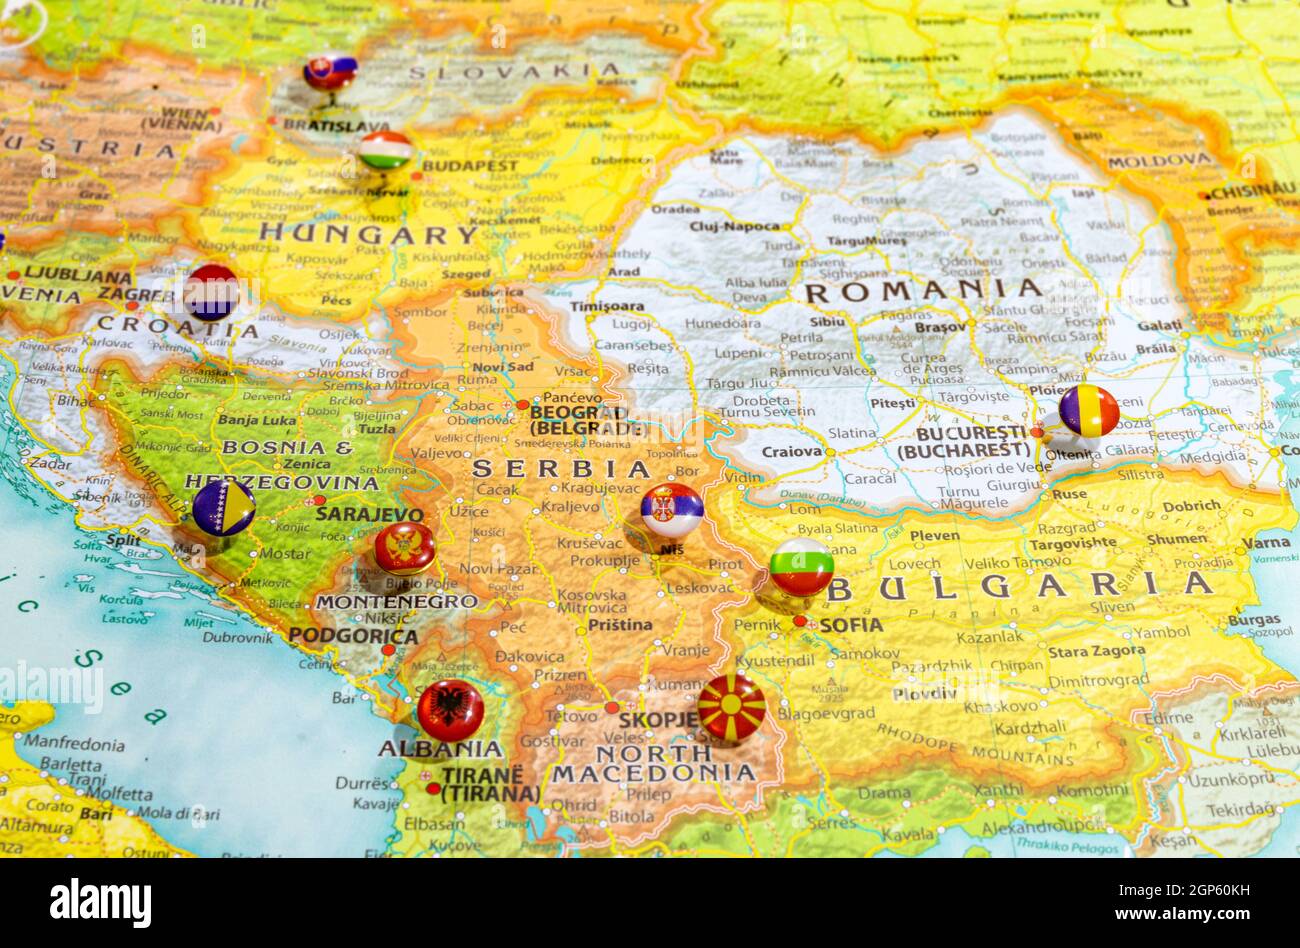 Close up view of Balkan peninsula on geographical globe, Map shows capitals countries Serbia - Belgrade, Bulgaria - Sofia, Romania - Bucharest, Monten Stock Photo